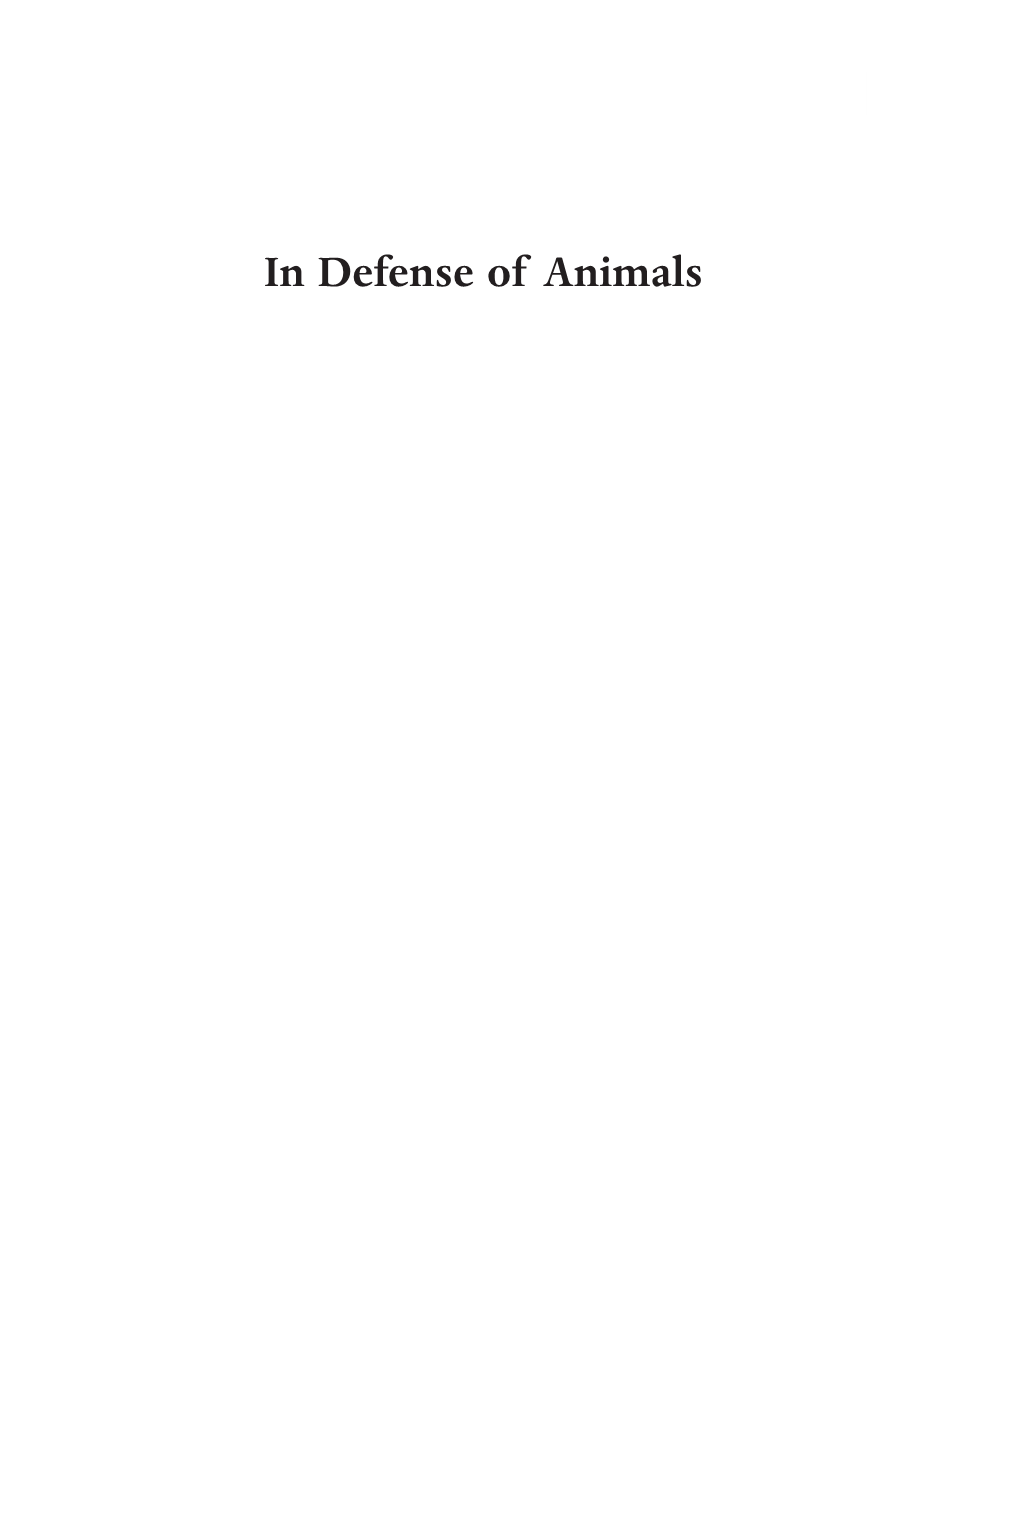 Peter-Singer-In-Defense-Of-Animals-1